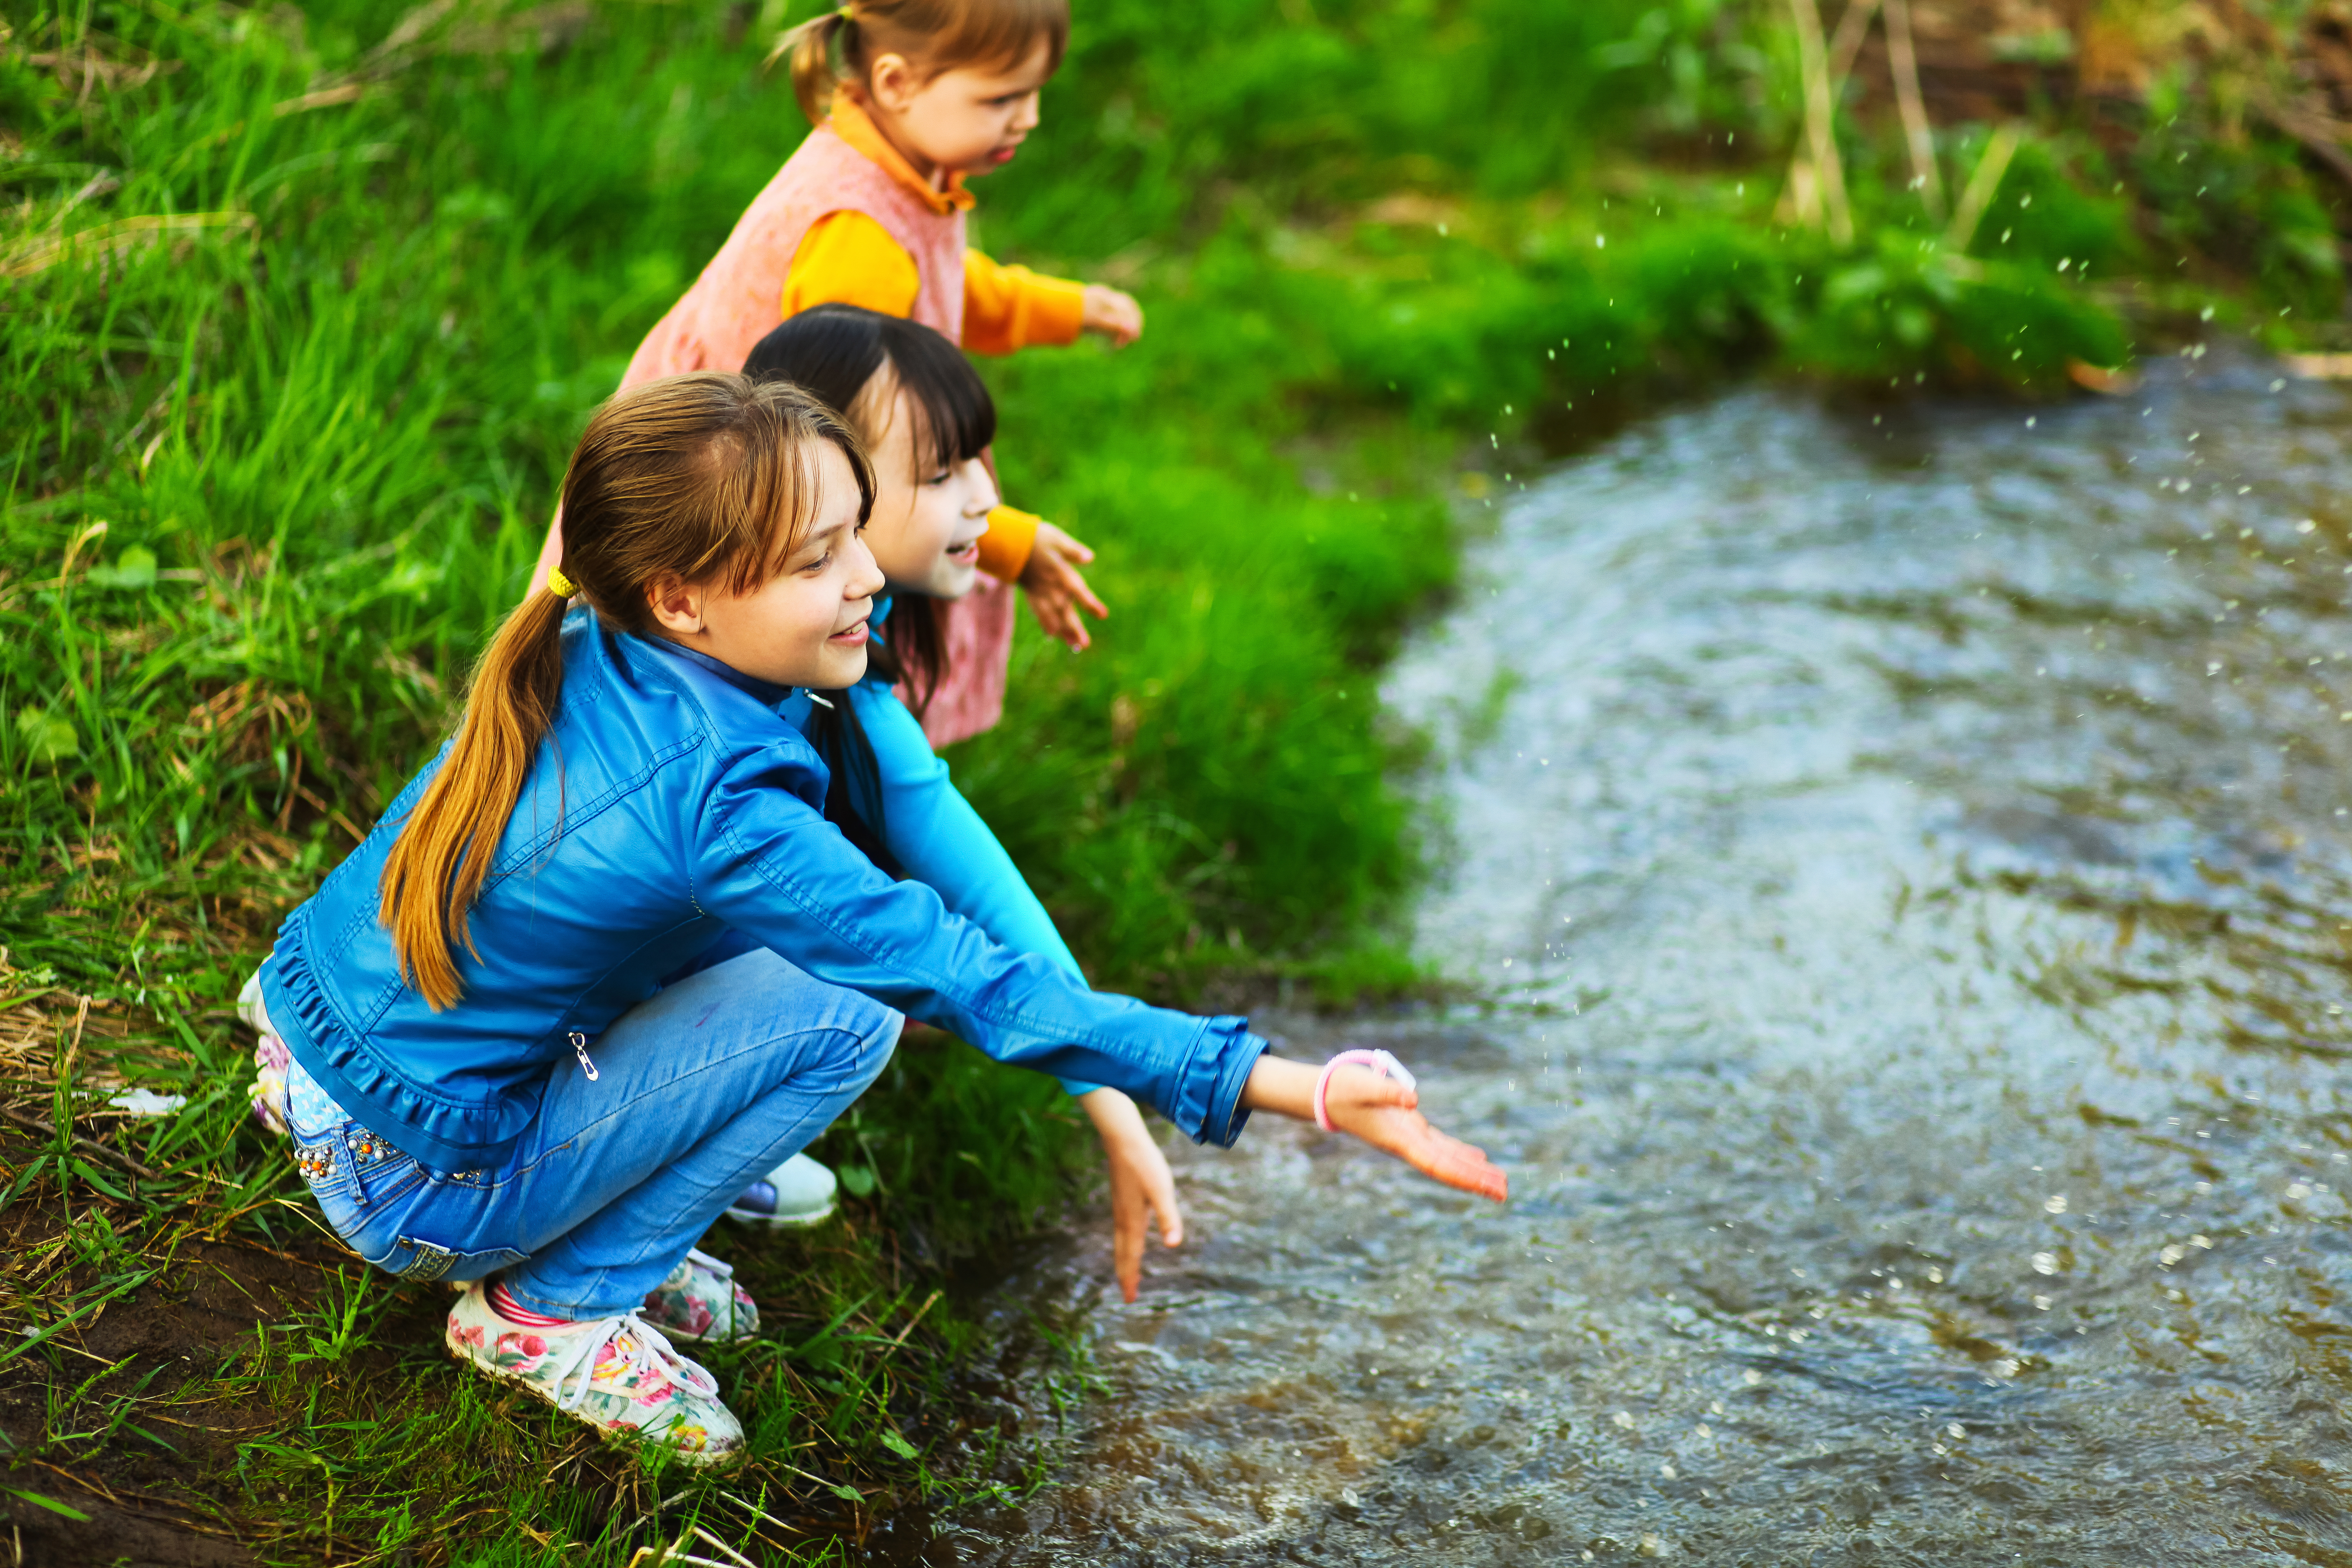 The children happy outdoors sitting on river © EduardSV/Adobe Stock